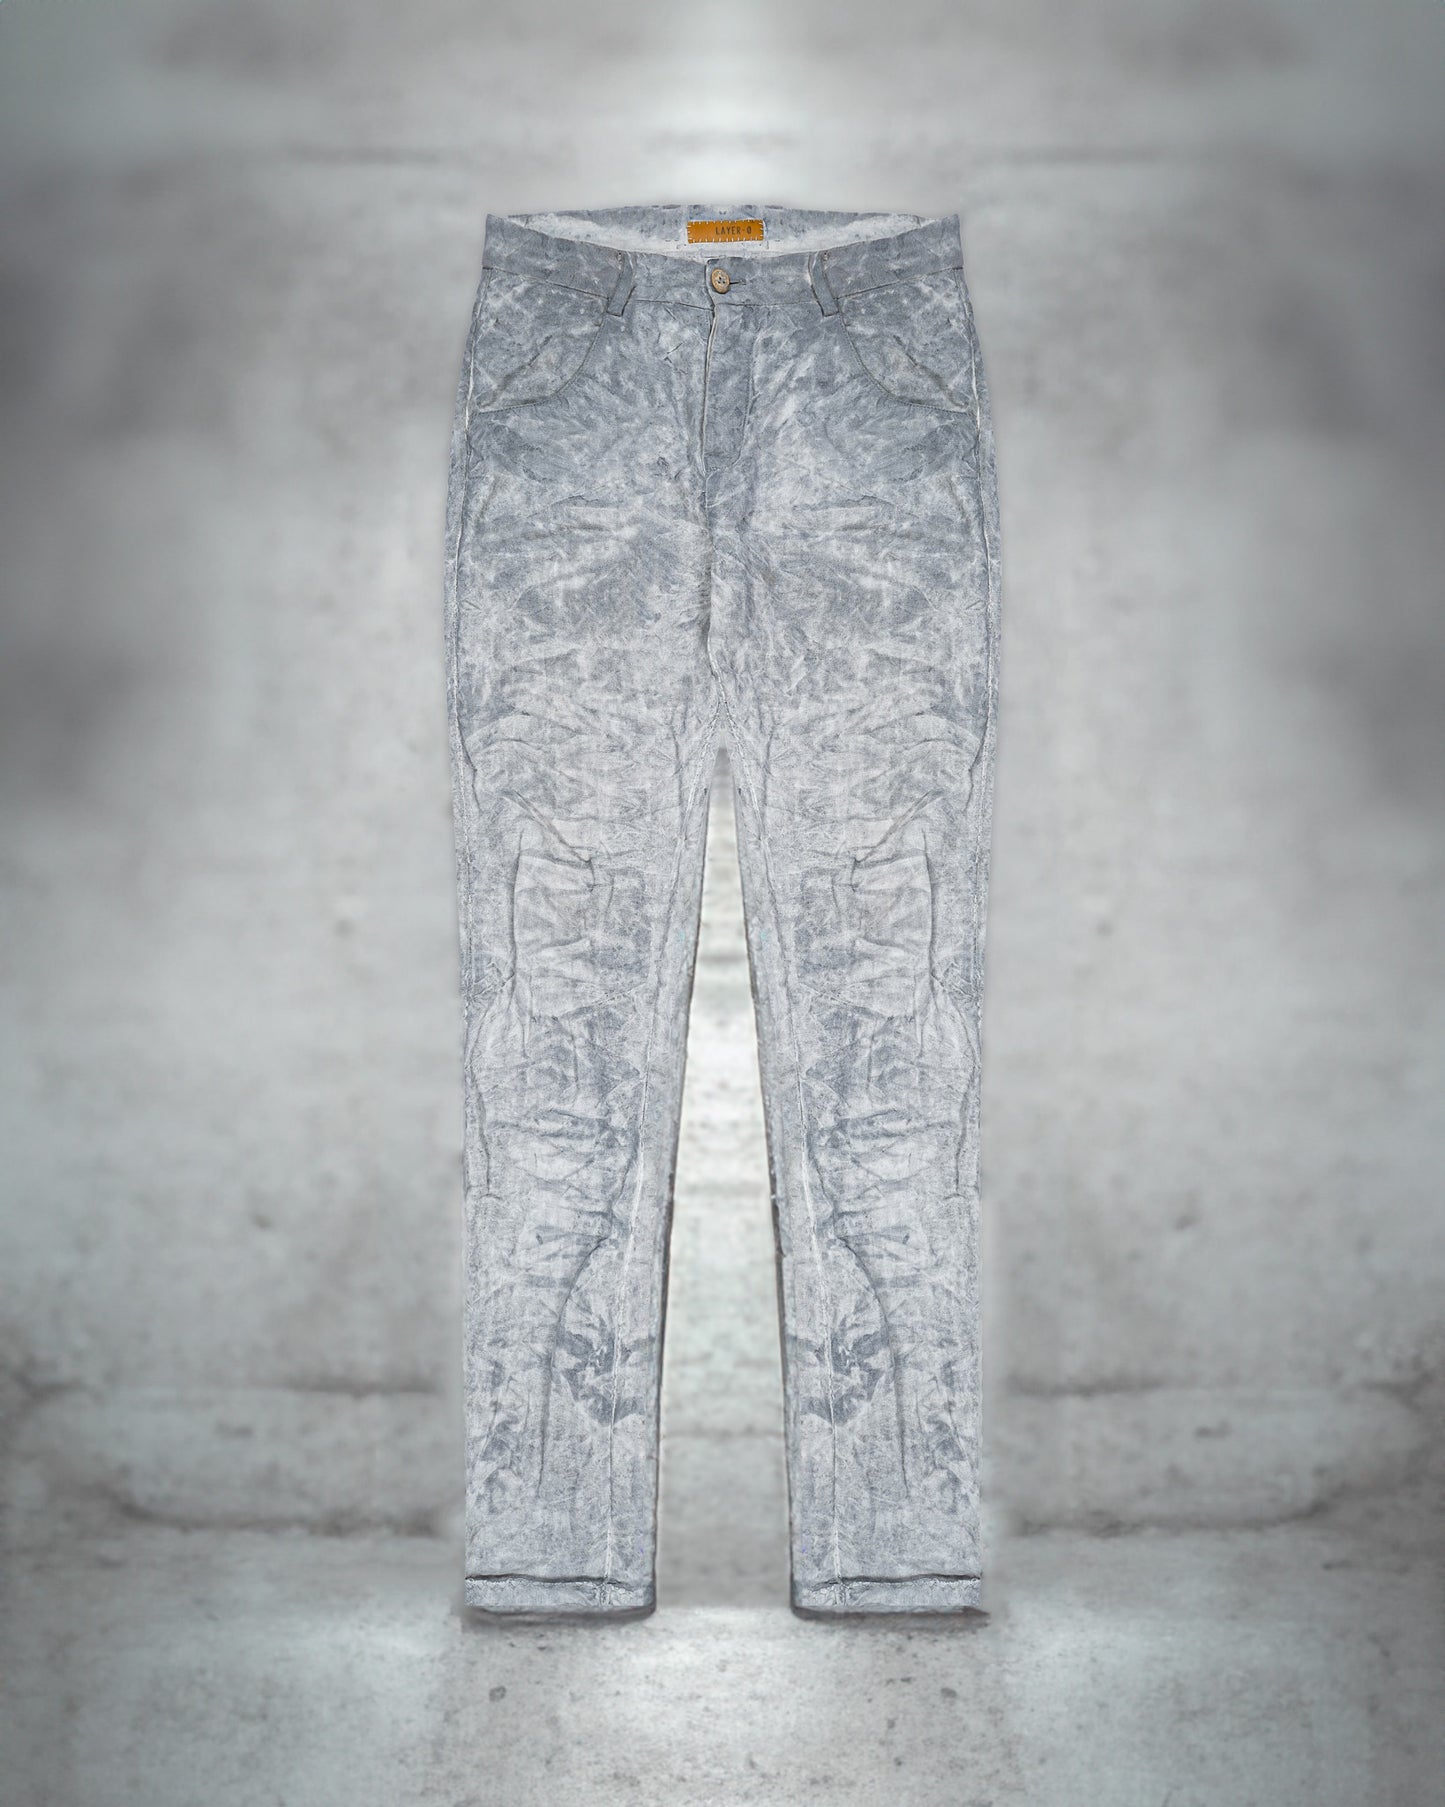 Layer-0 5-Pocket Garment Dyed Linen Jeans